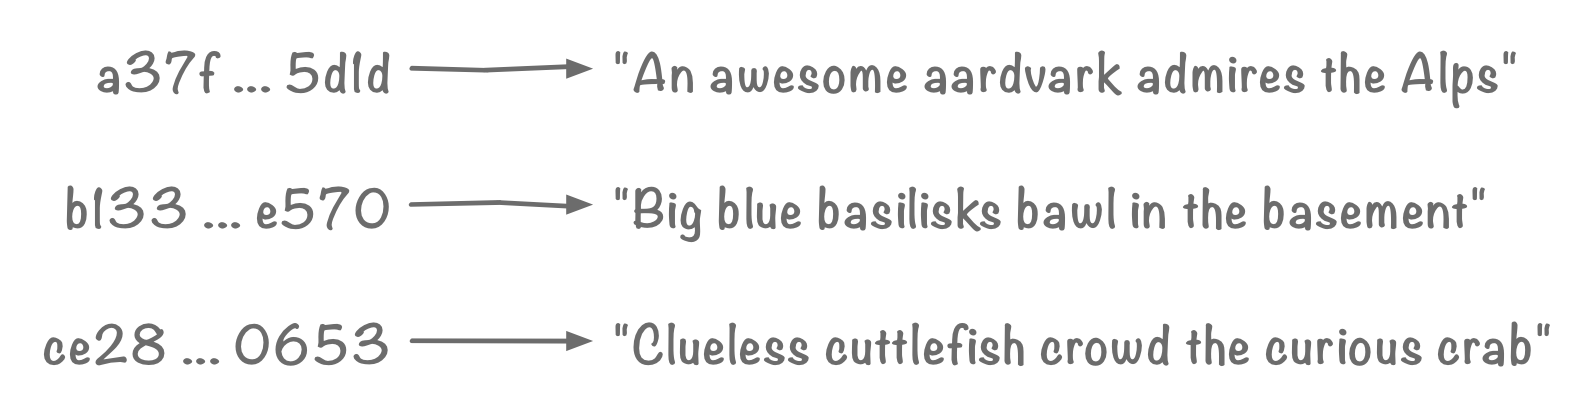 Three objects. “a37f...” ~> “An awesome aardvark…”, “b133” ~> “Big blue basilisks…”, “ce28…” ~> “Clueless cuttlefish”